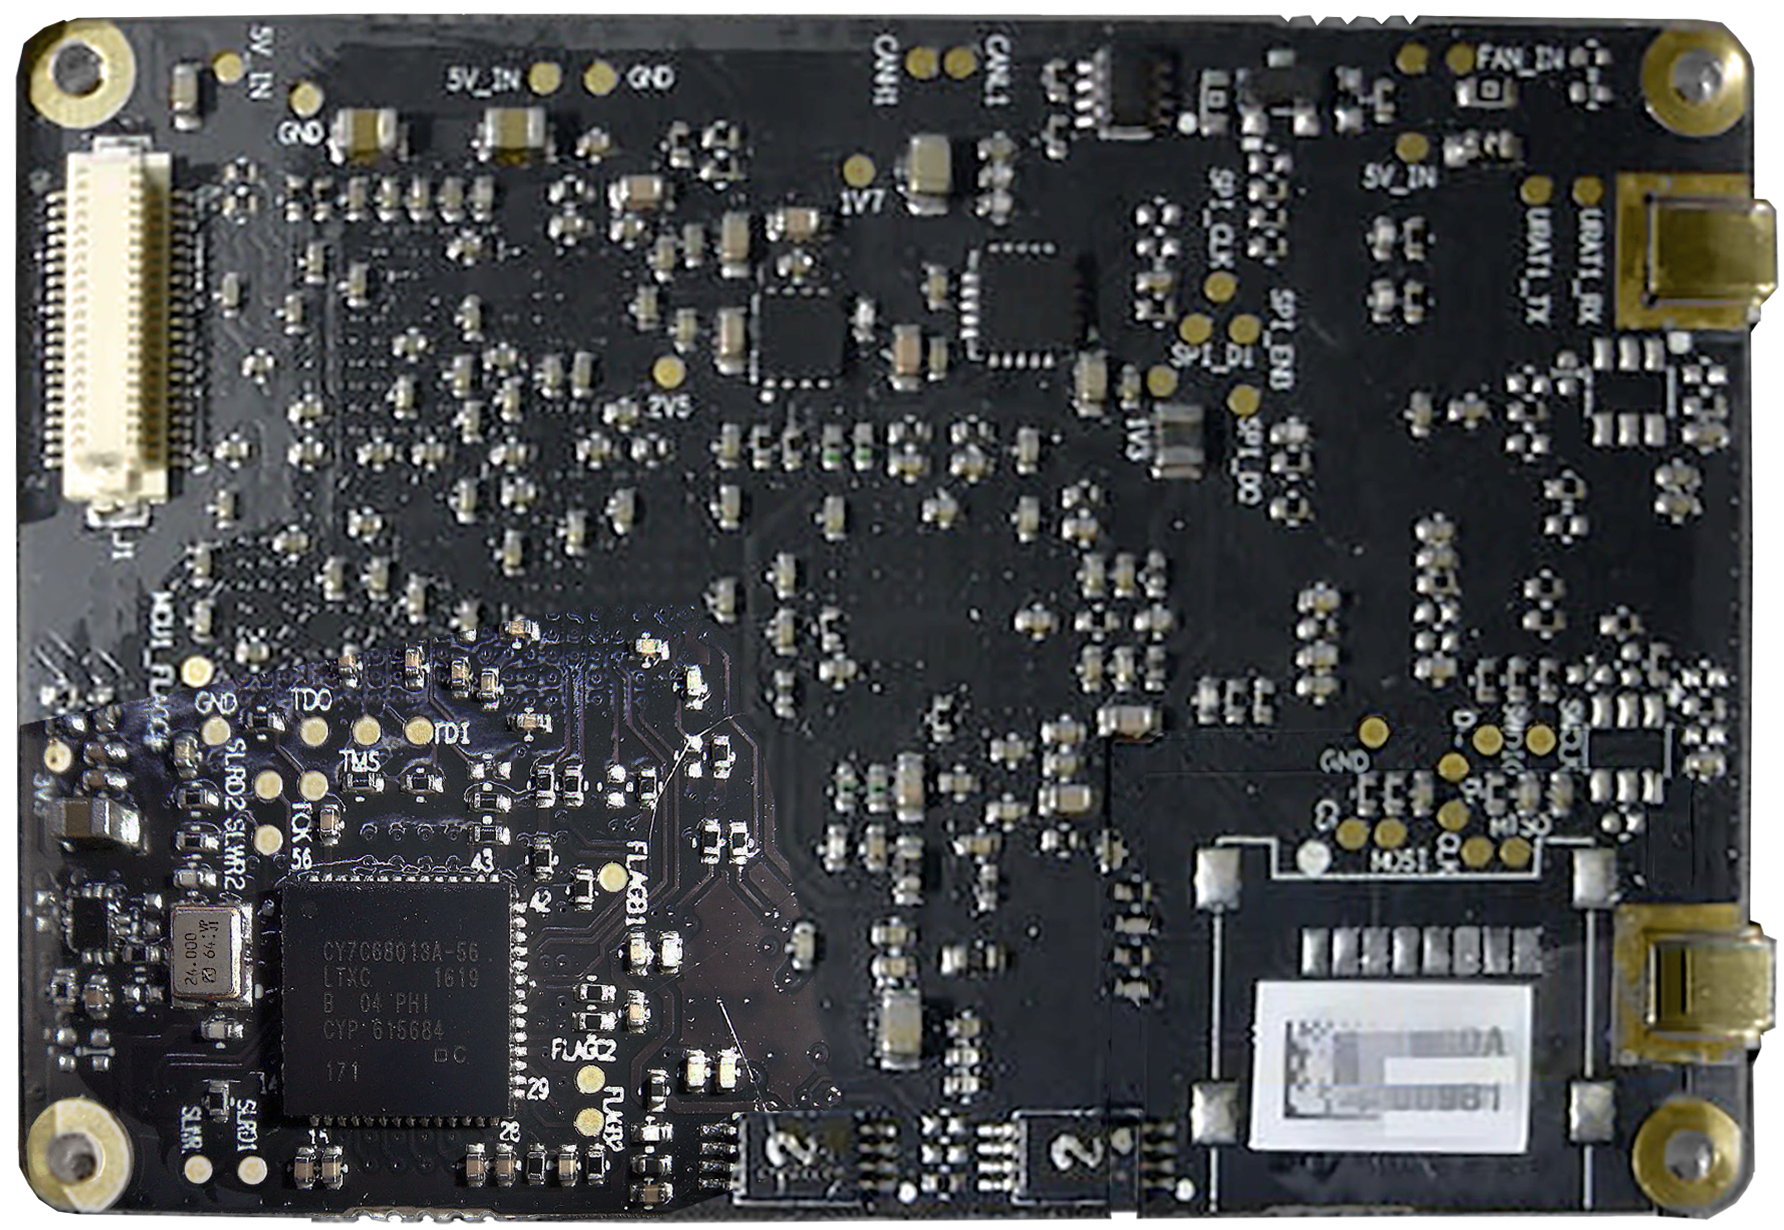 IG810 Air OFDM Transceiver board · o-gs/dji-firmware-tools Wiki 